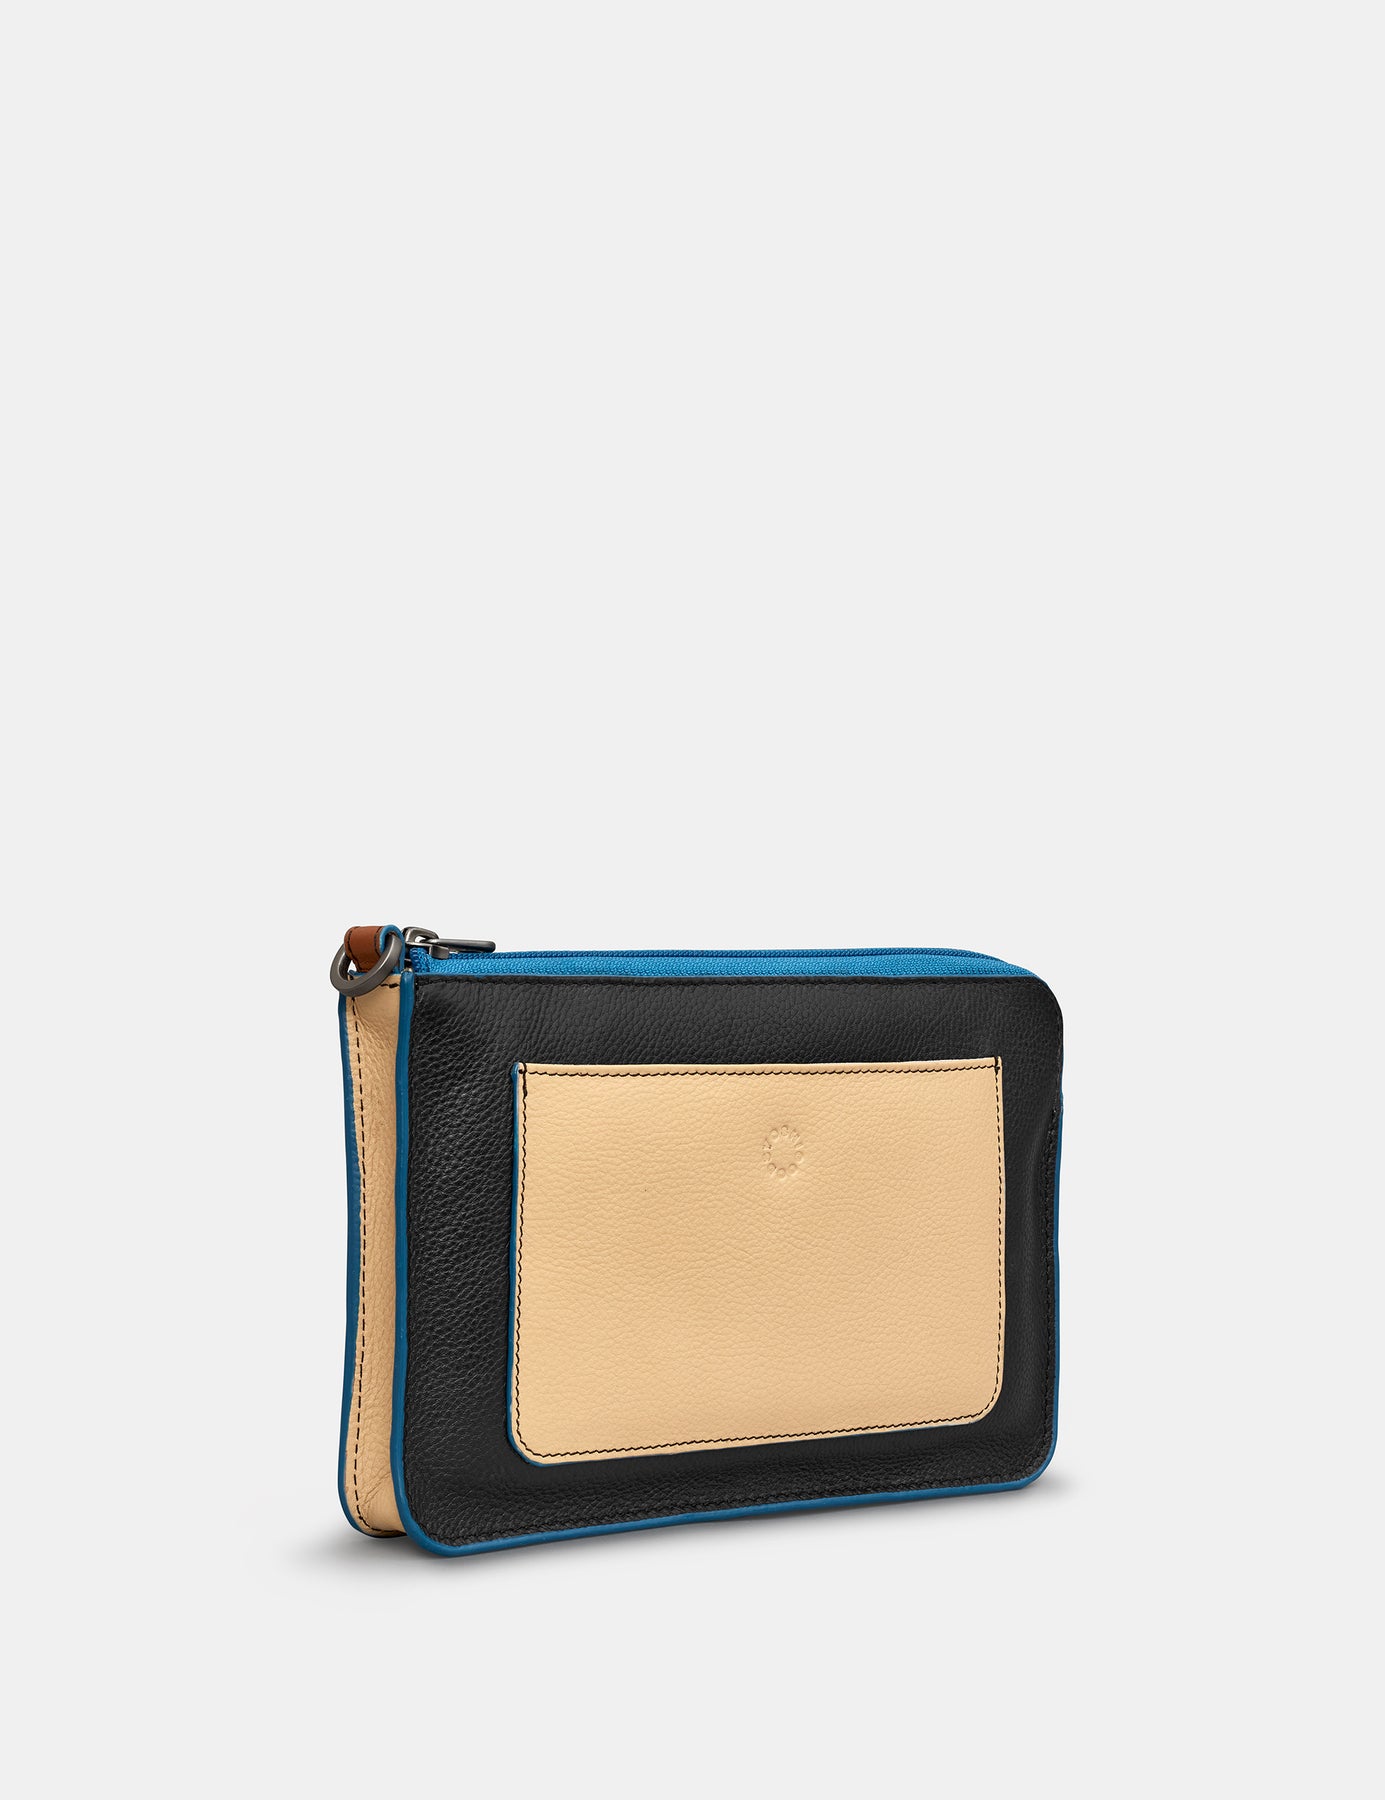 Yoshi Roxy Leather Envelope Clutch Bag / Evening Bag